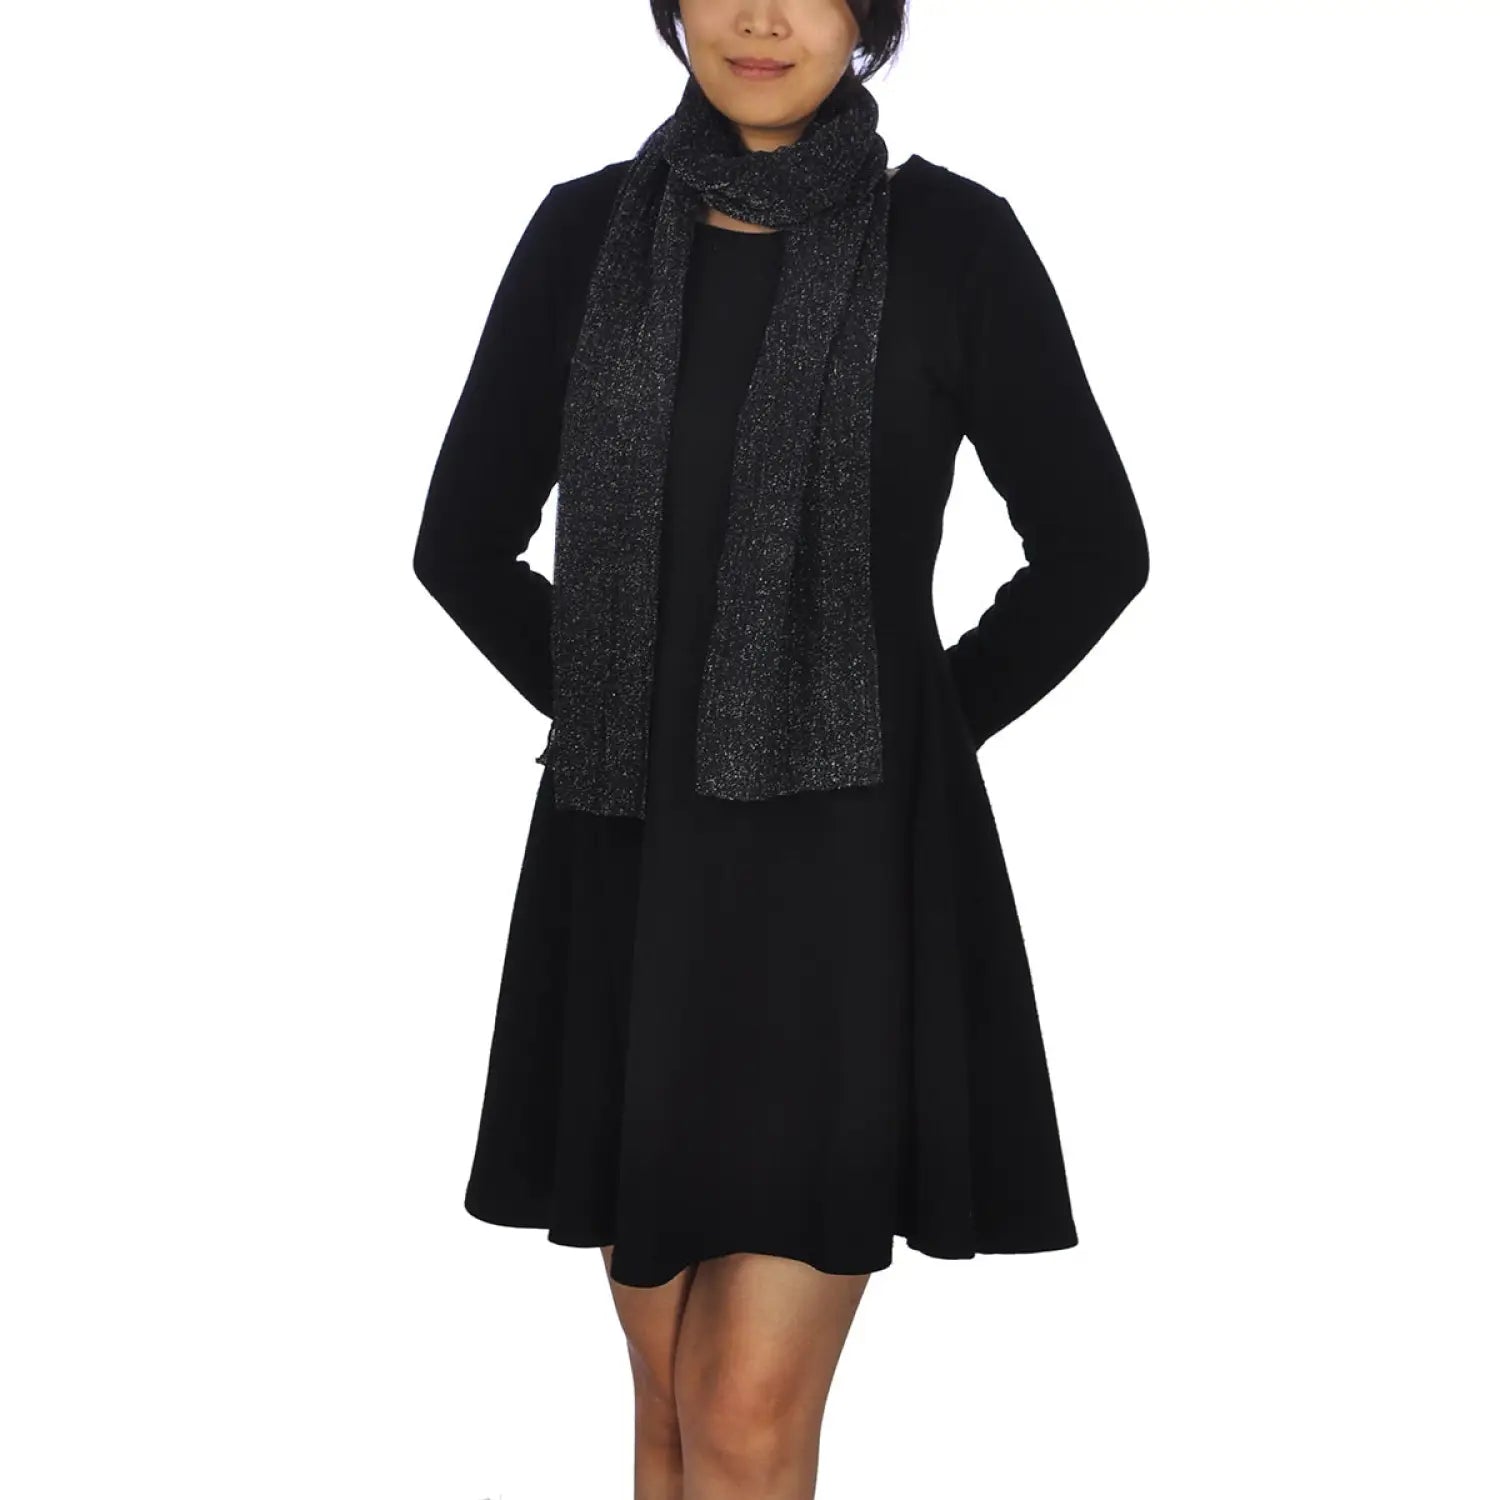 Elegant woman in black dress and coat modeling Glamorous Glittery Lightweight Evening Scarf